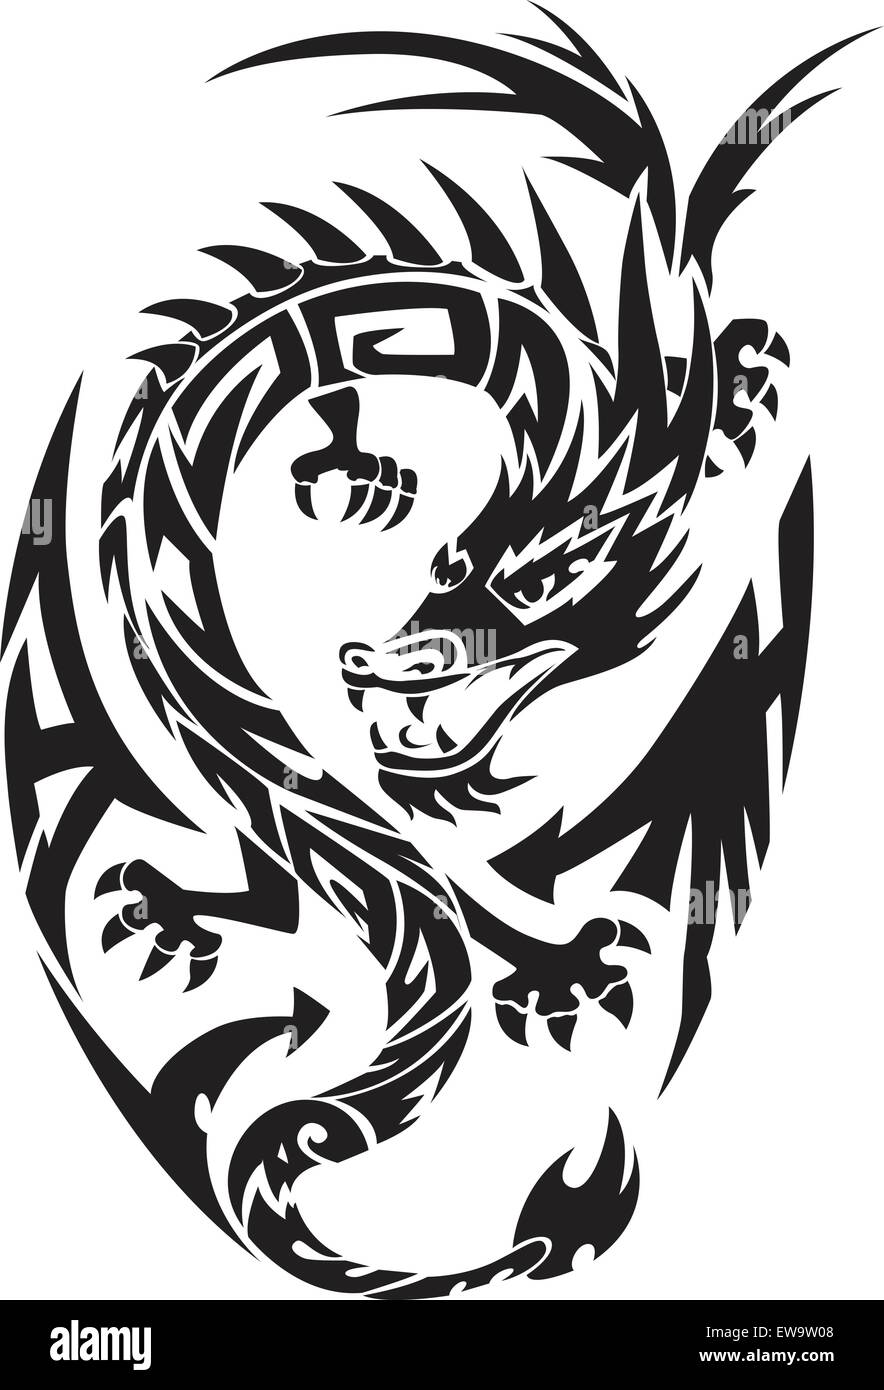 Dragon tattoo design, vintage engraved illustration Stock Vector Image ...